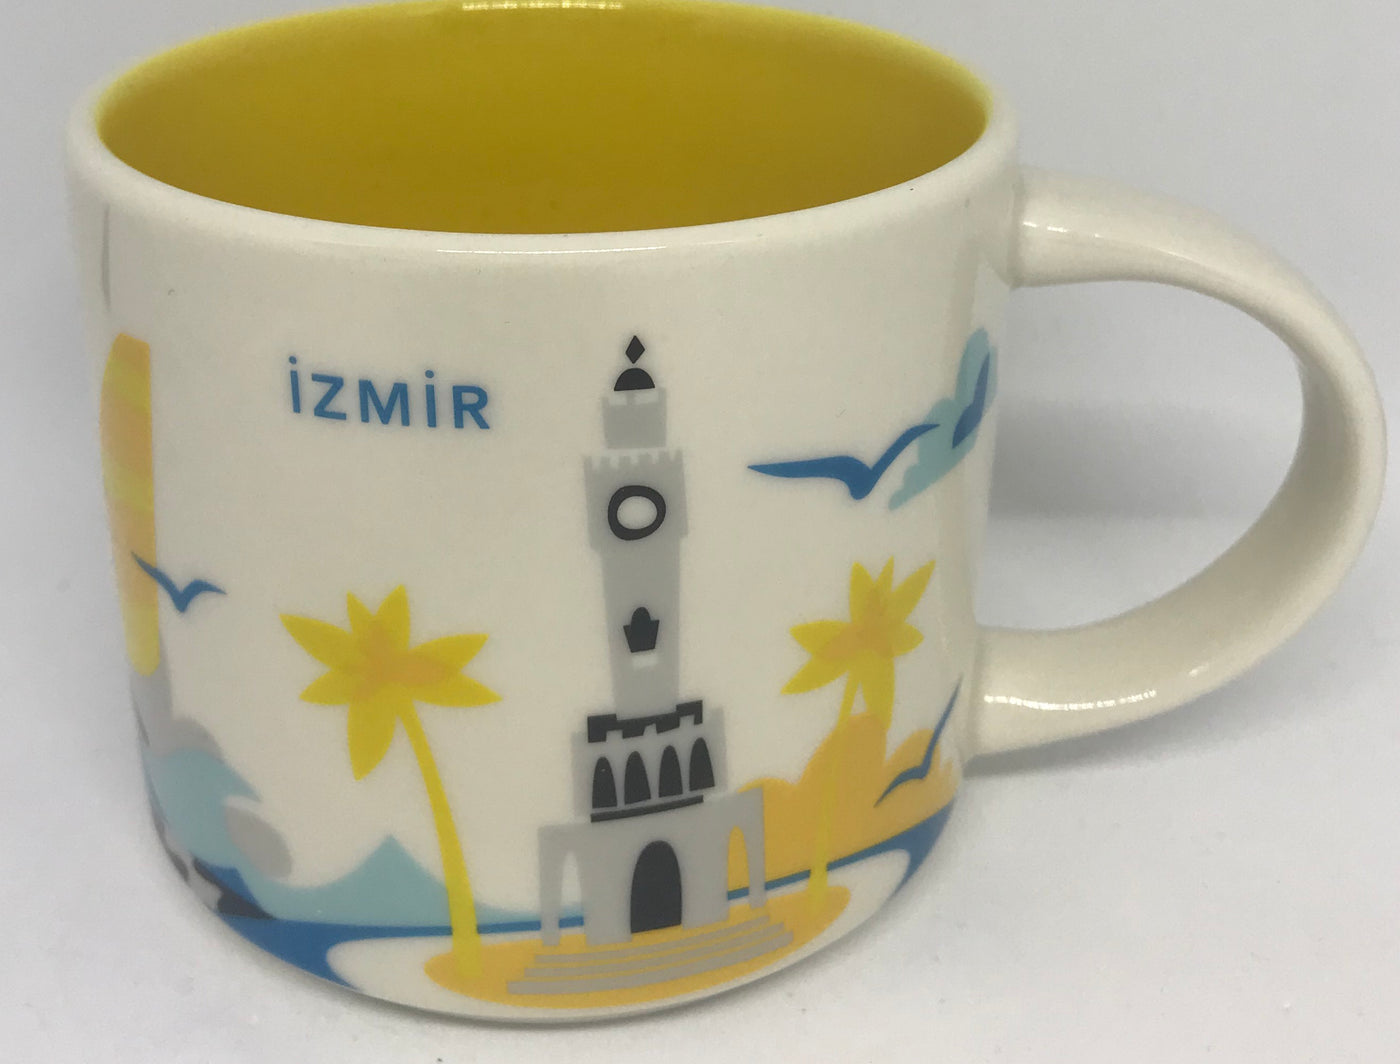 Starbucks You Are Here Collection Turkey Izmir Ceramic Coffee Mug New With Box